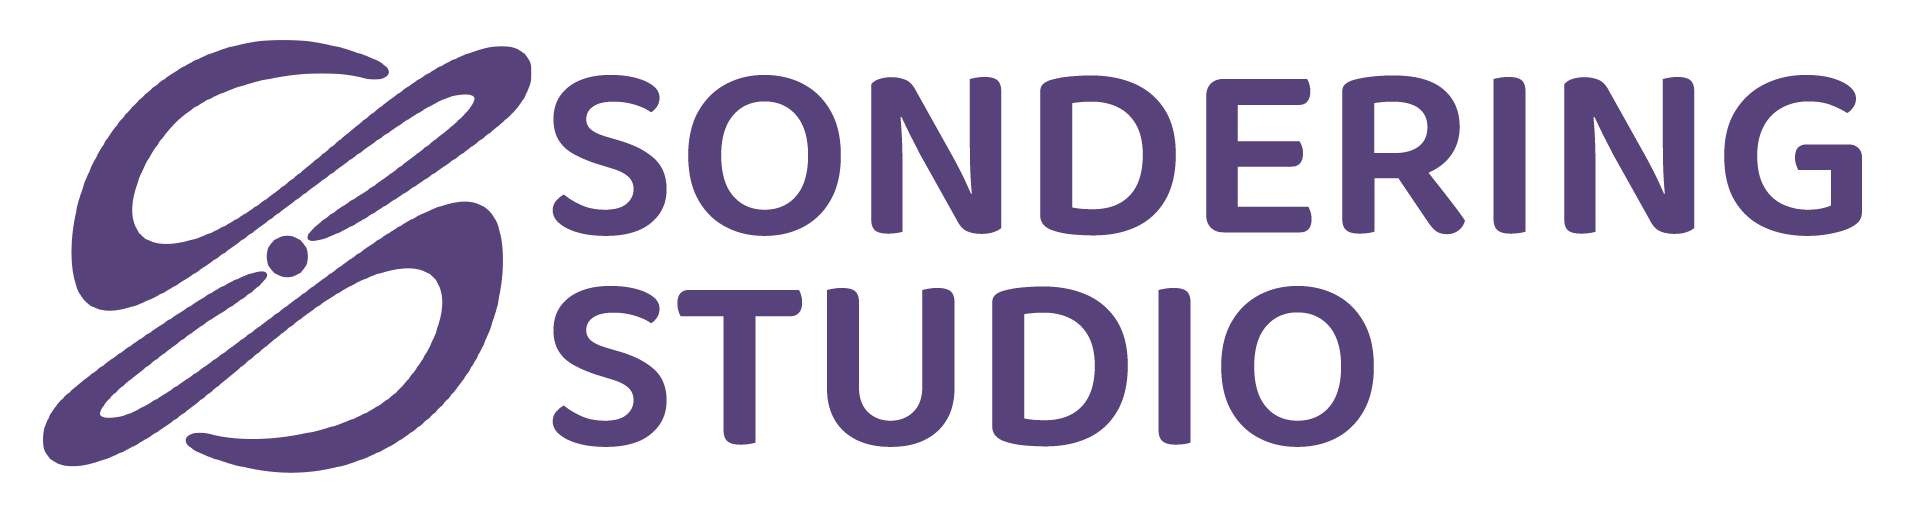 The purple Sondering Studio logomark on a white background